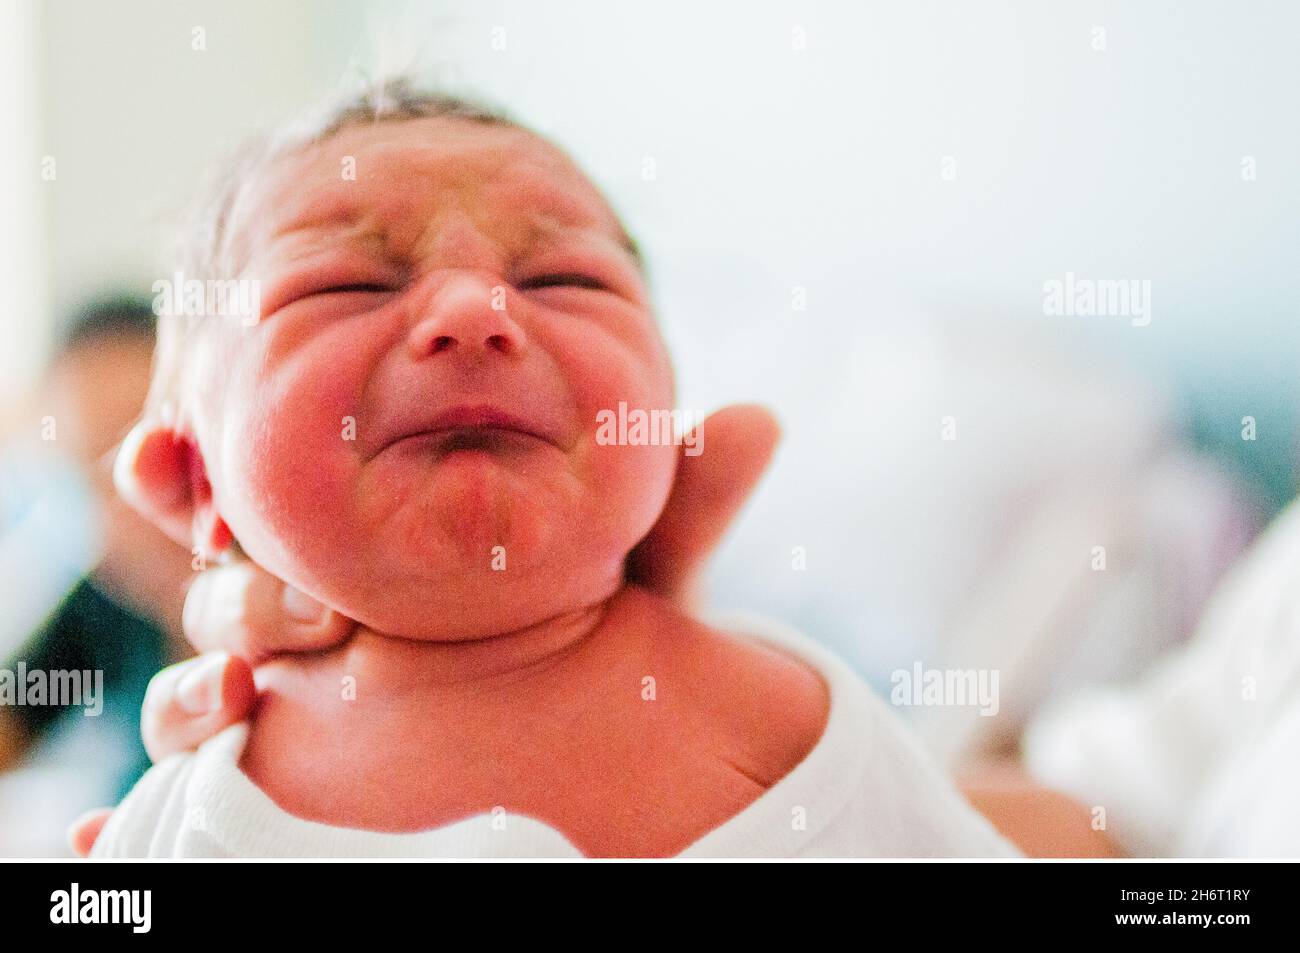 Newborn Baby face and hand Stock Photo